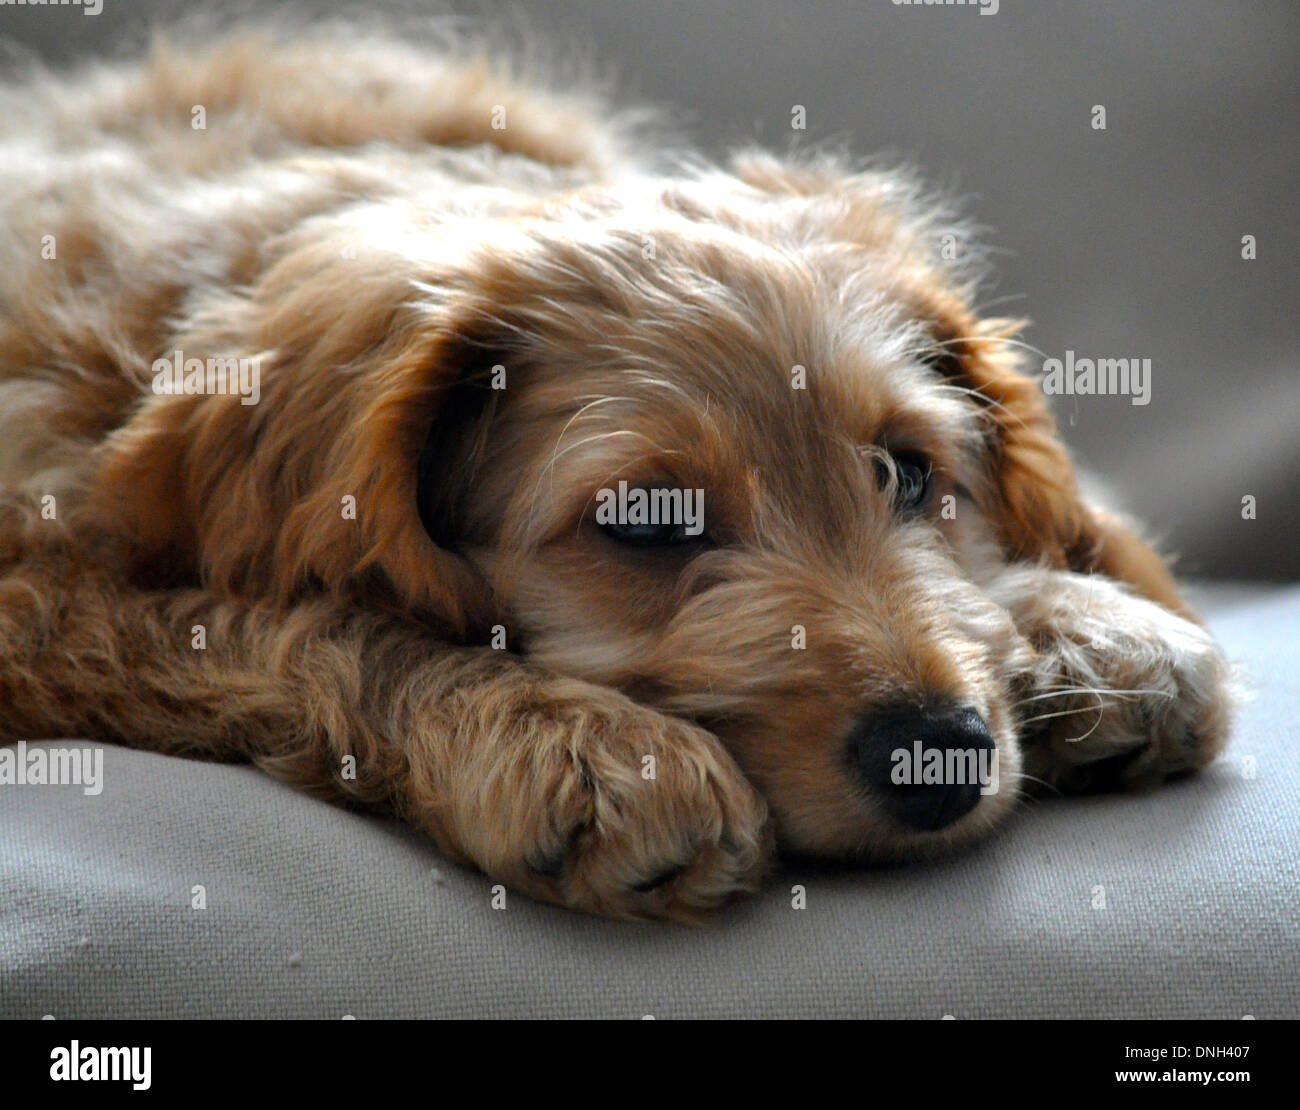 golden puppy dog looks sad with puppy dog eyes Stock Photo